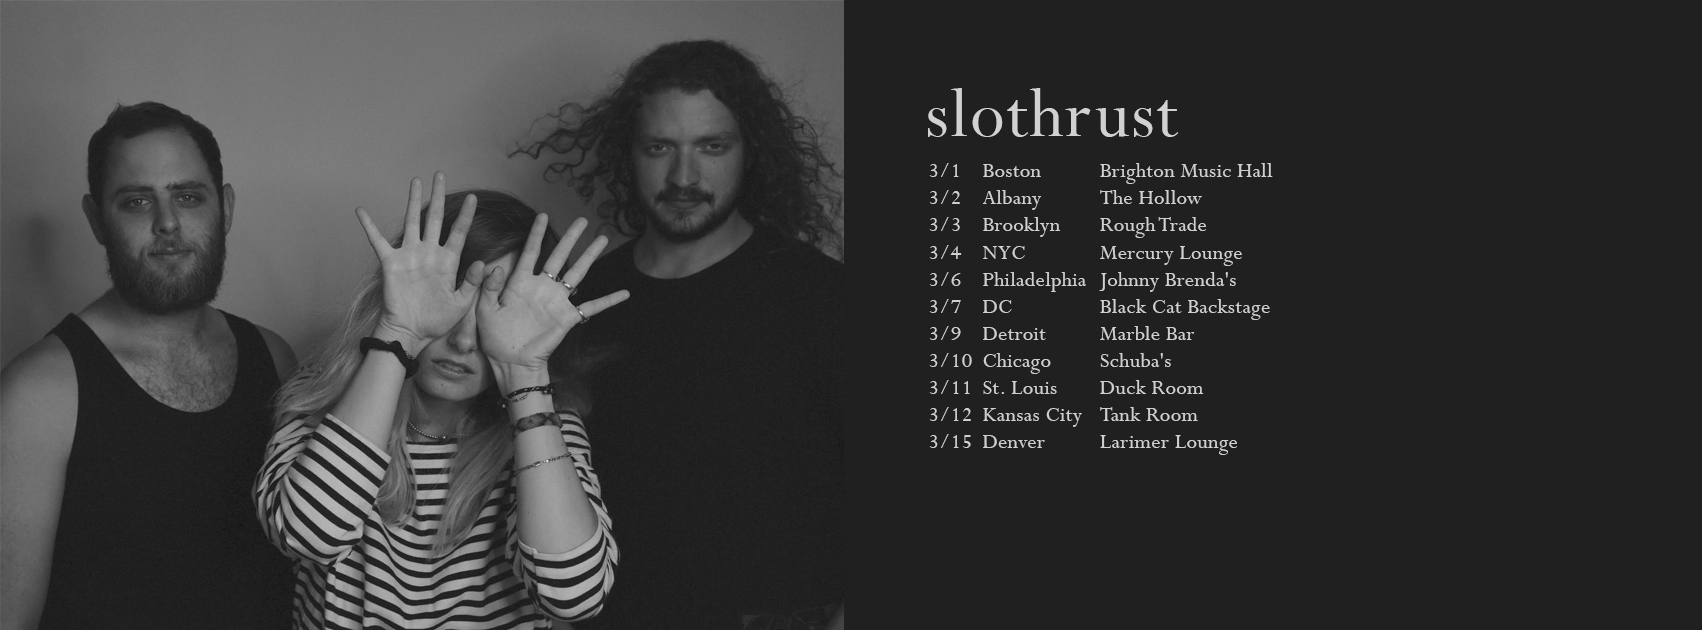 Slothrust 2017 tour dates